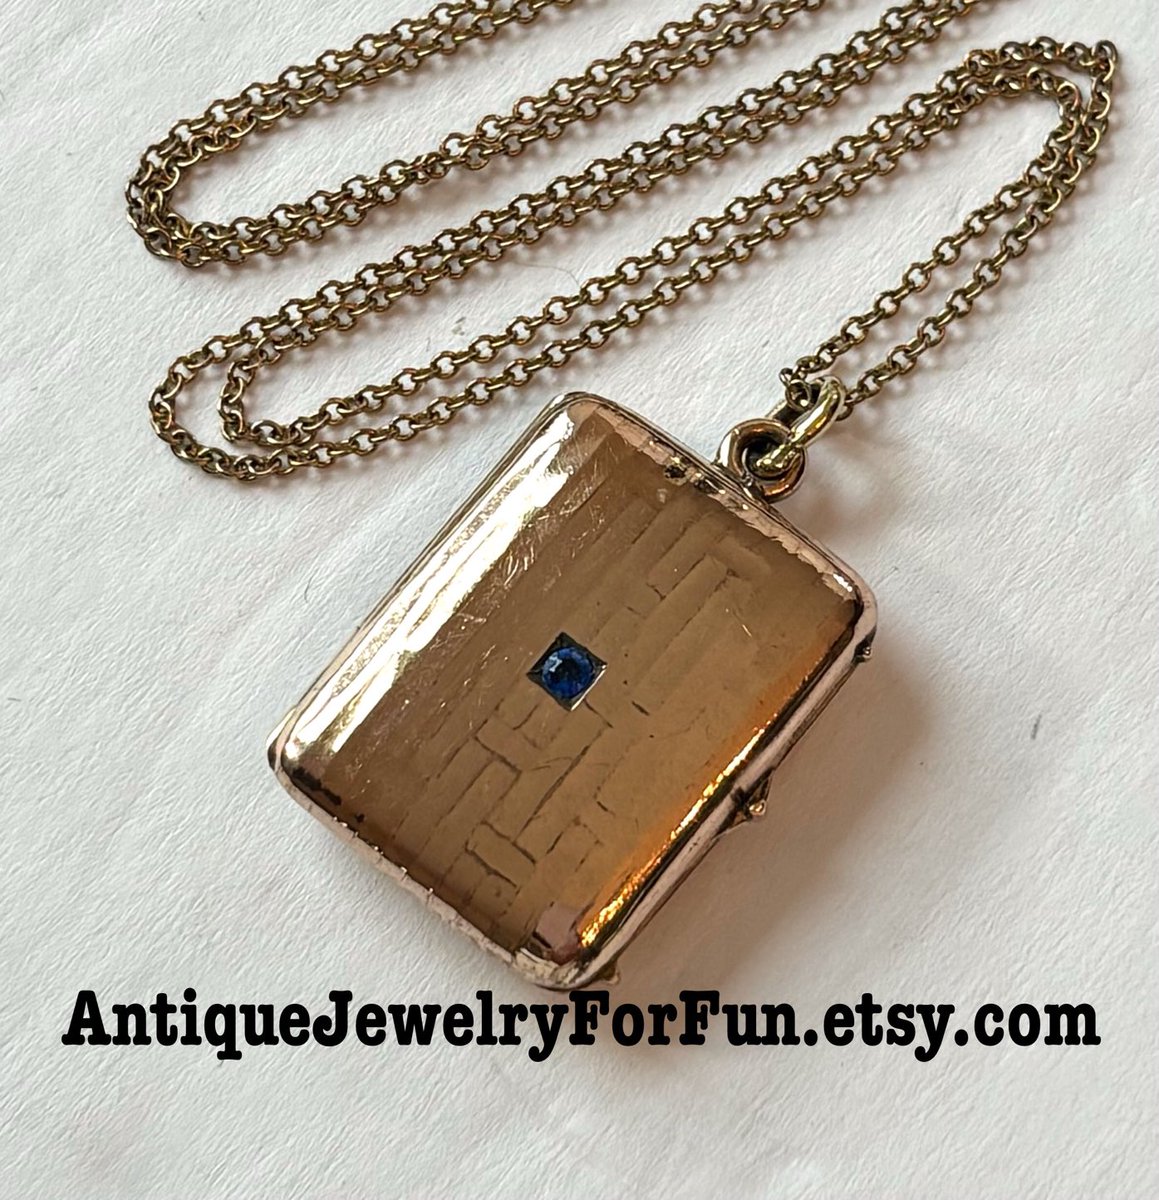 #antiquejewelryforfun #etsyshop #locket #locketnecklace etsy.com/listing/173452…